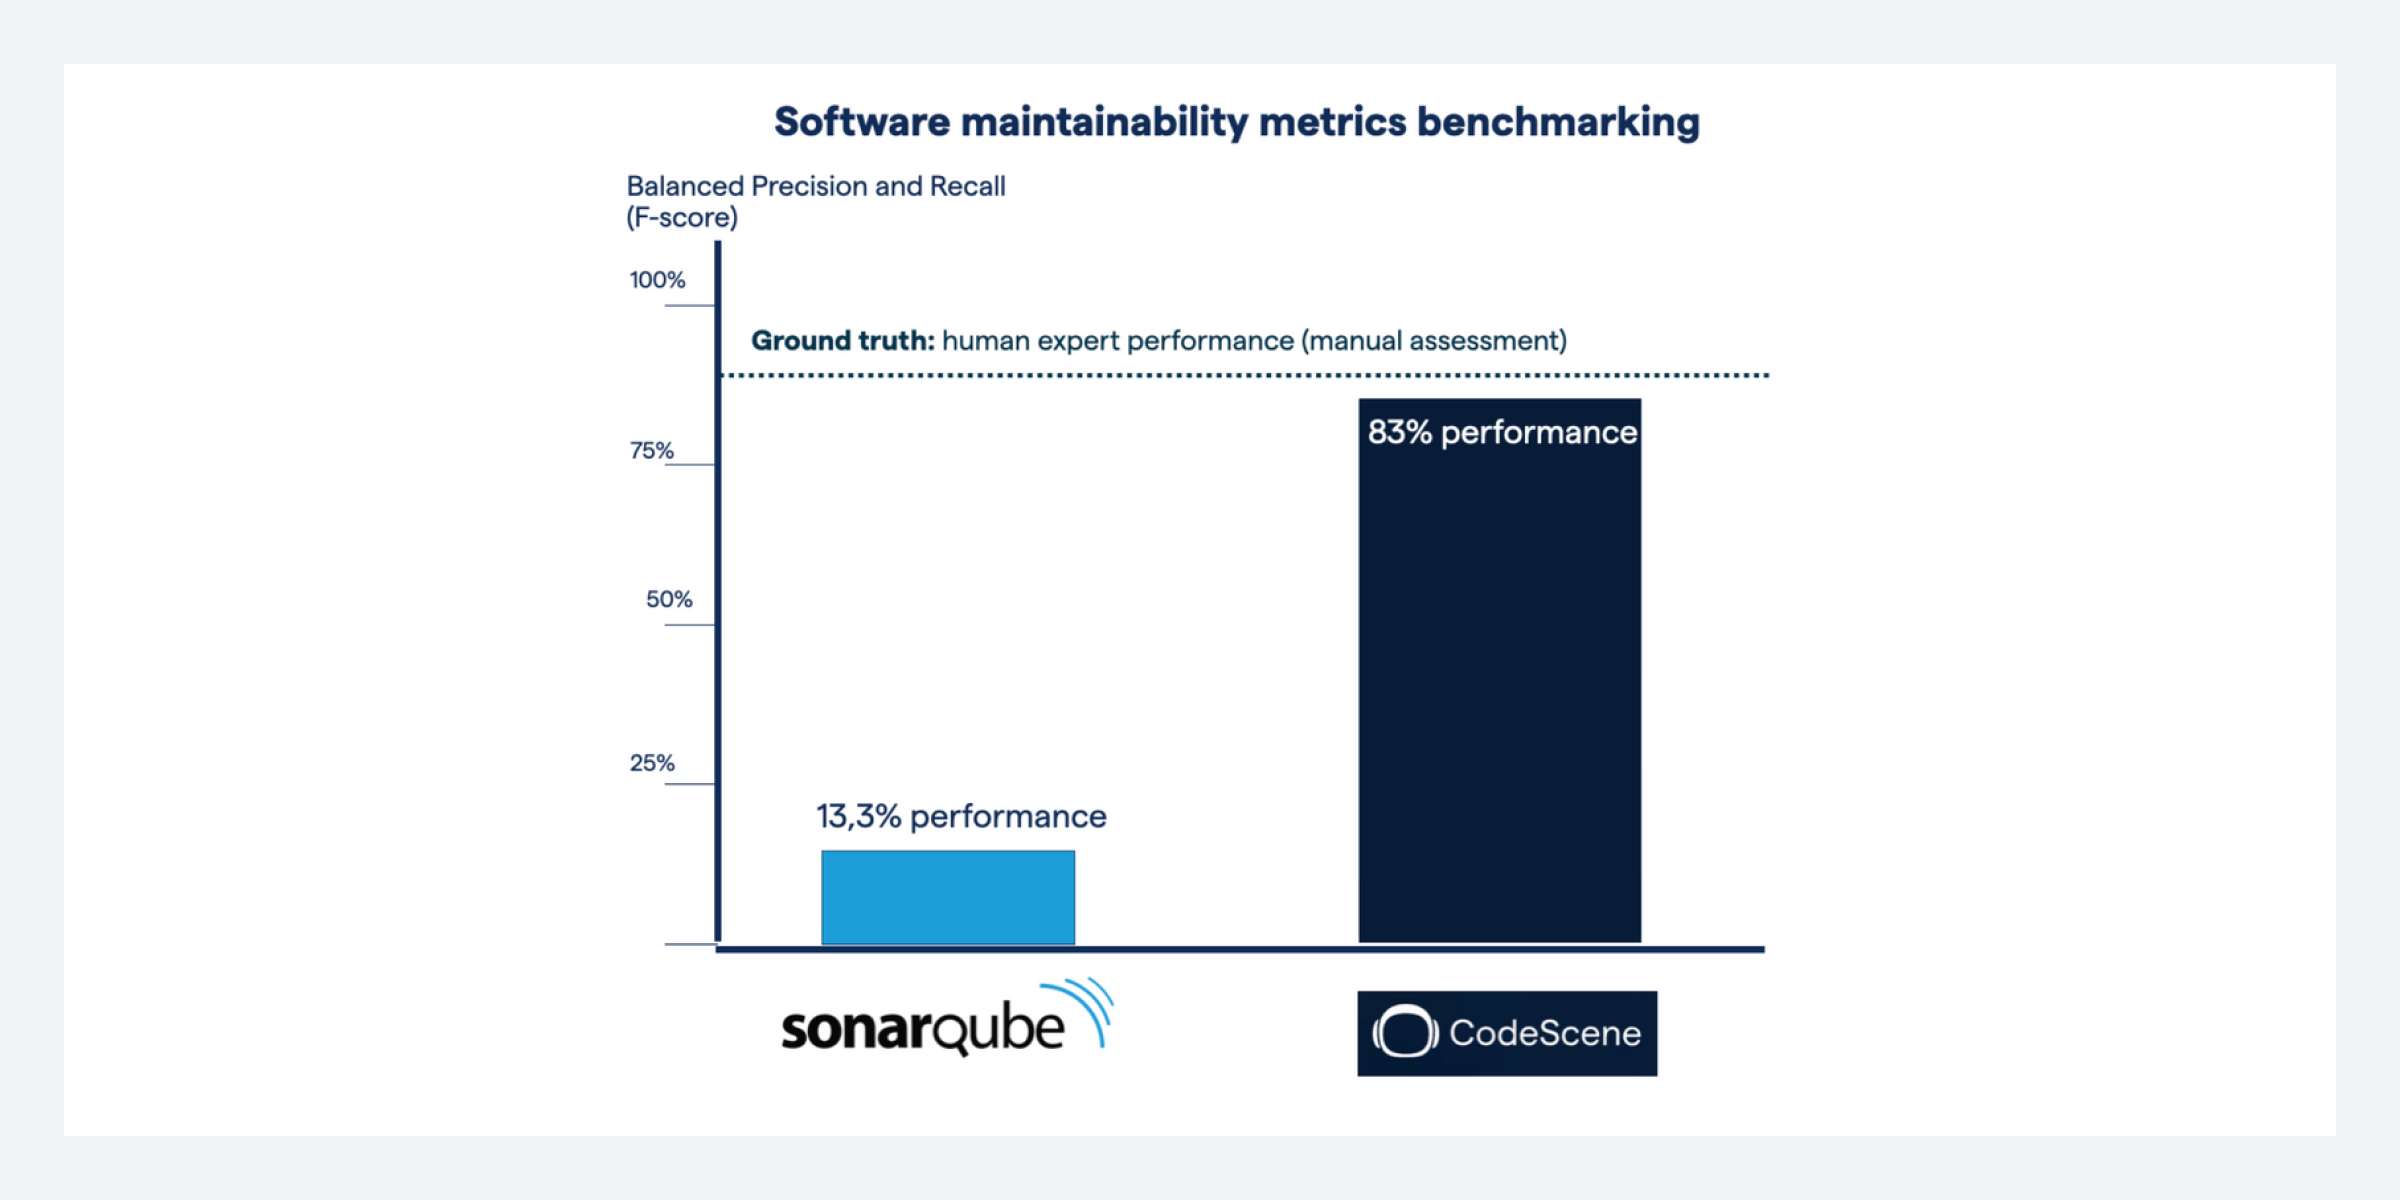 6X improvement over SonarQube - Raising the Maintainability bar